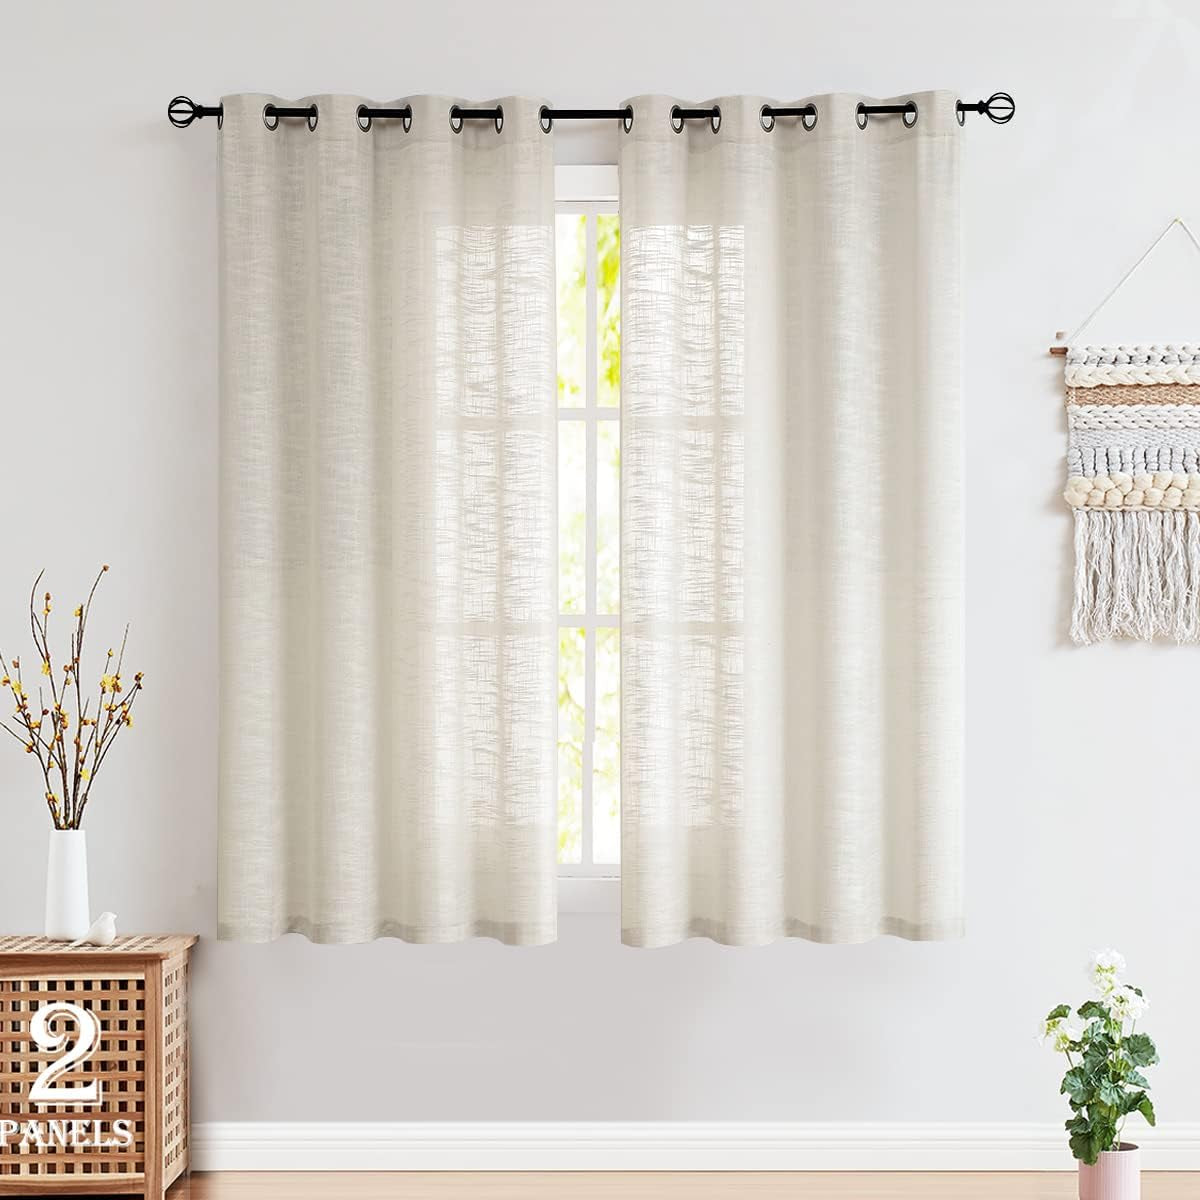 FMFUNCTEX Natural Semi-Sheer Curtains for Living Room Rich Linen Textured Look Window Curtain Draperies 52”W X63”L 2 Panels Grommet Top  Fmfunctex   